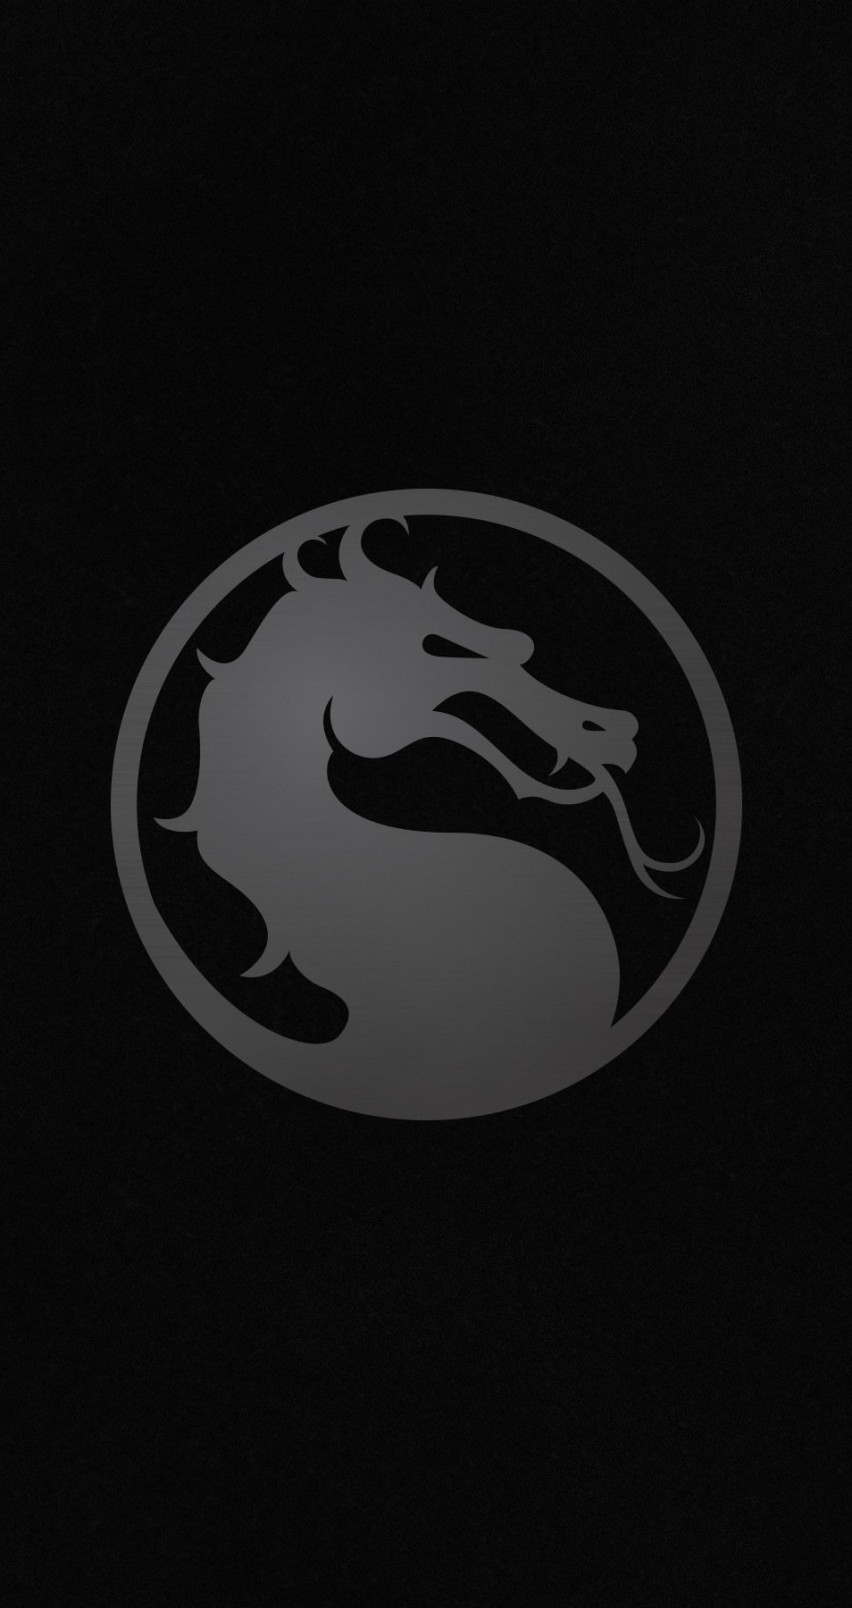 Mortal Kombat X Logo Wallpaper for Apple iPhone 6 / 6s